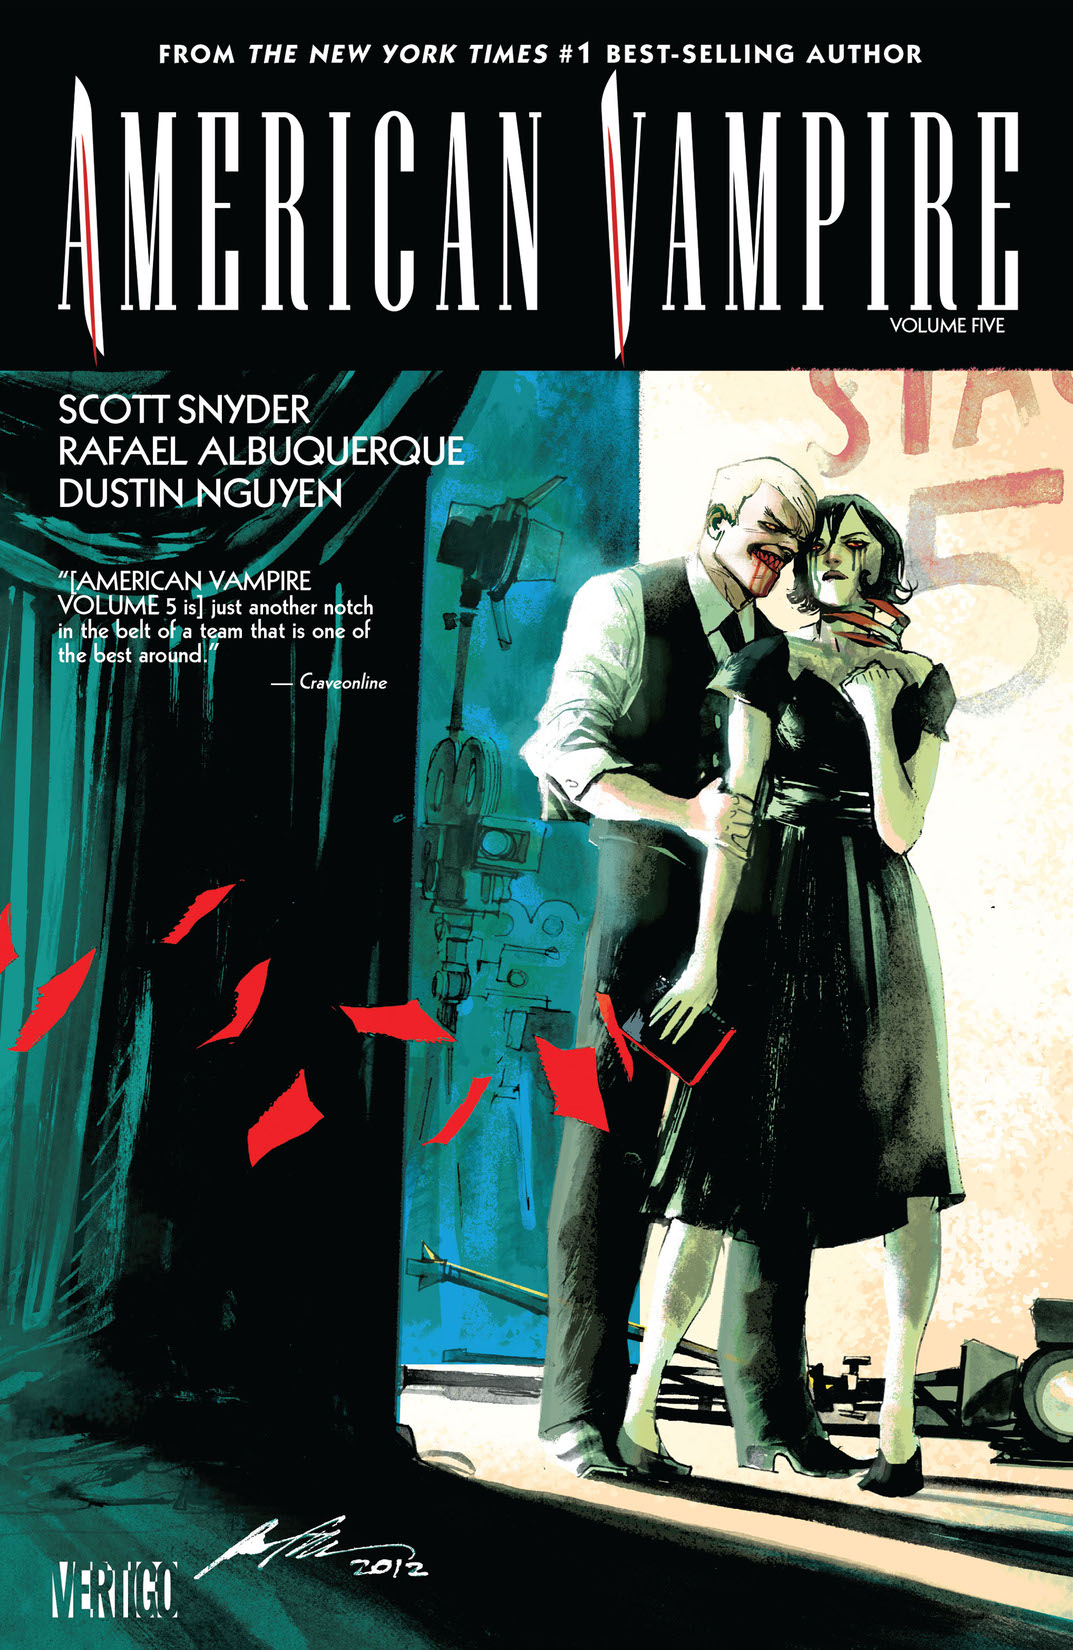 American Vampire Vol. 5 preview images